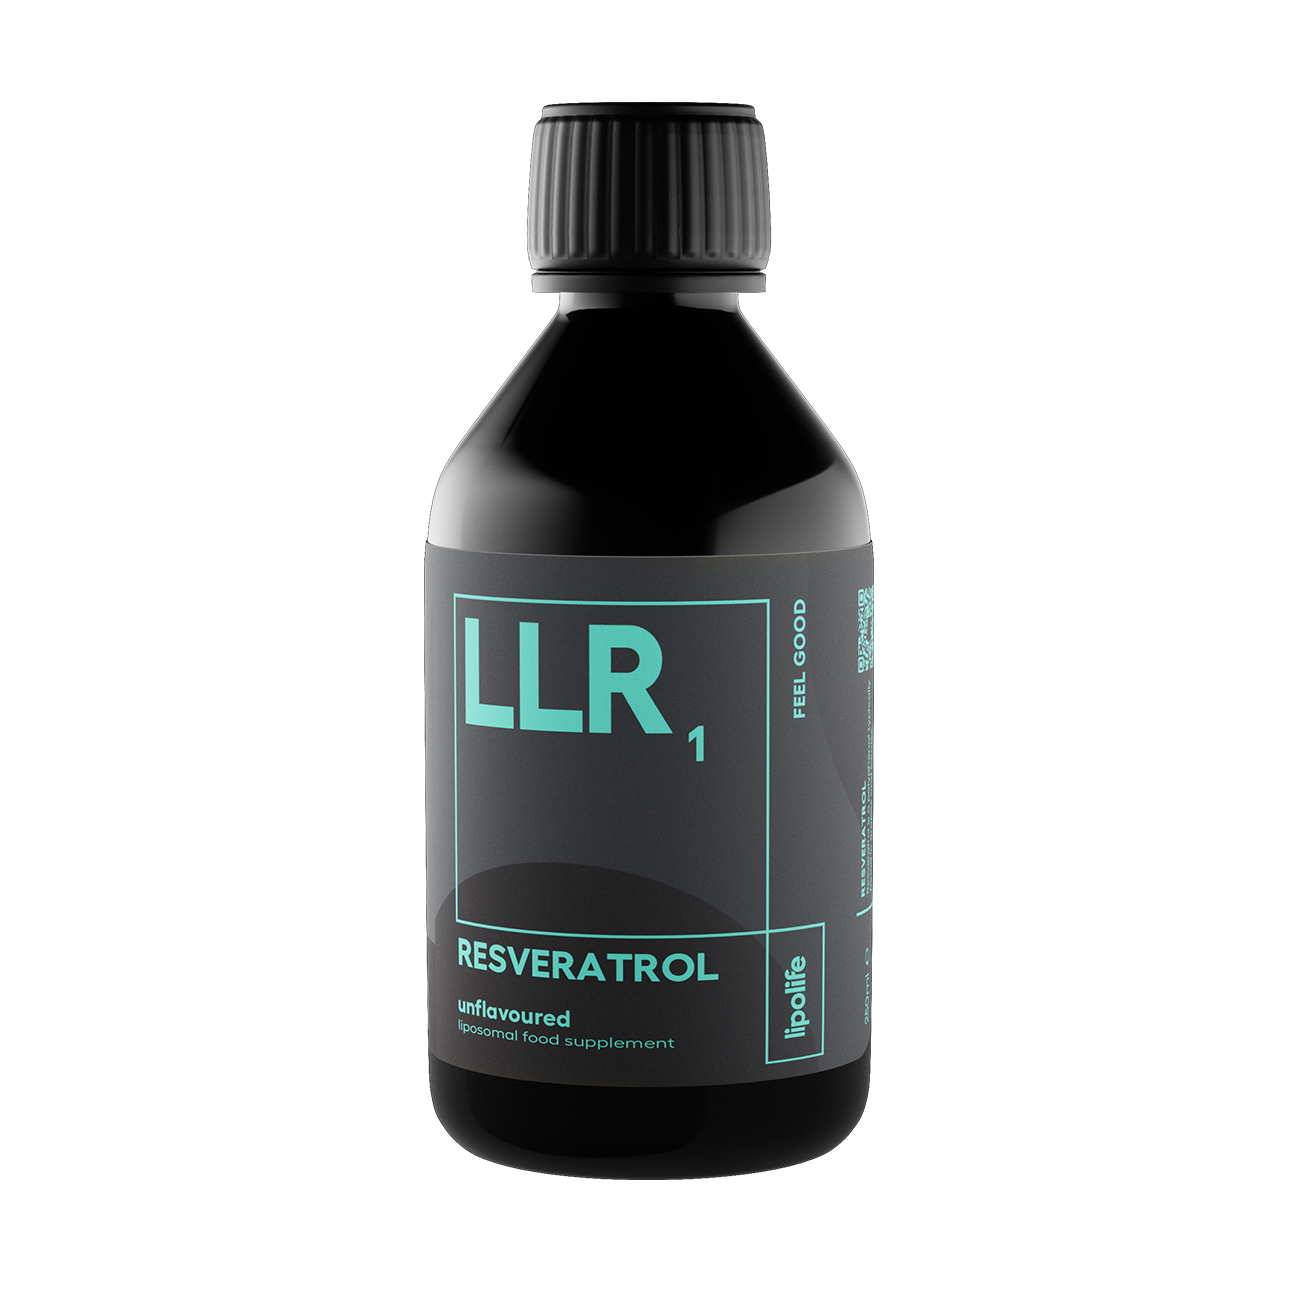 Liposomaal Resveratrol met zonnebloem lecithine 250ml